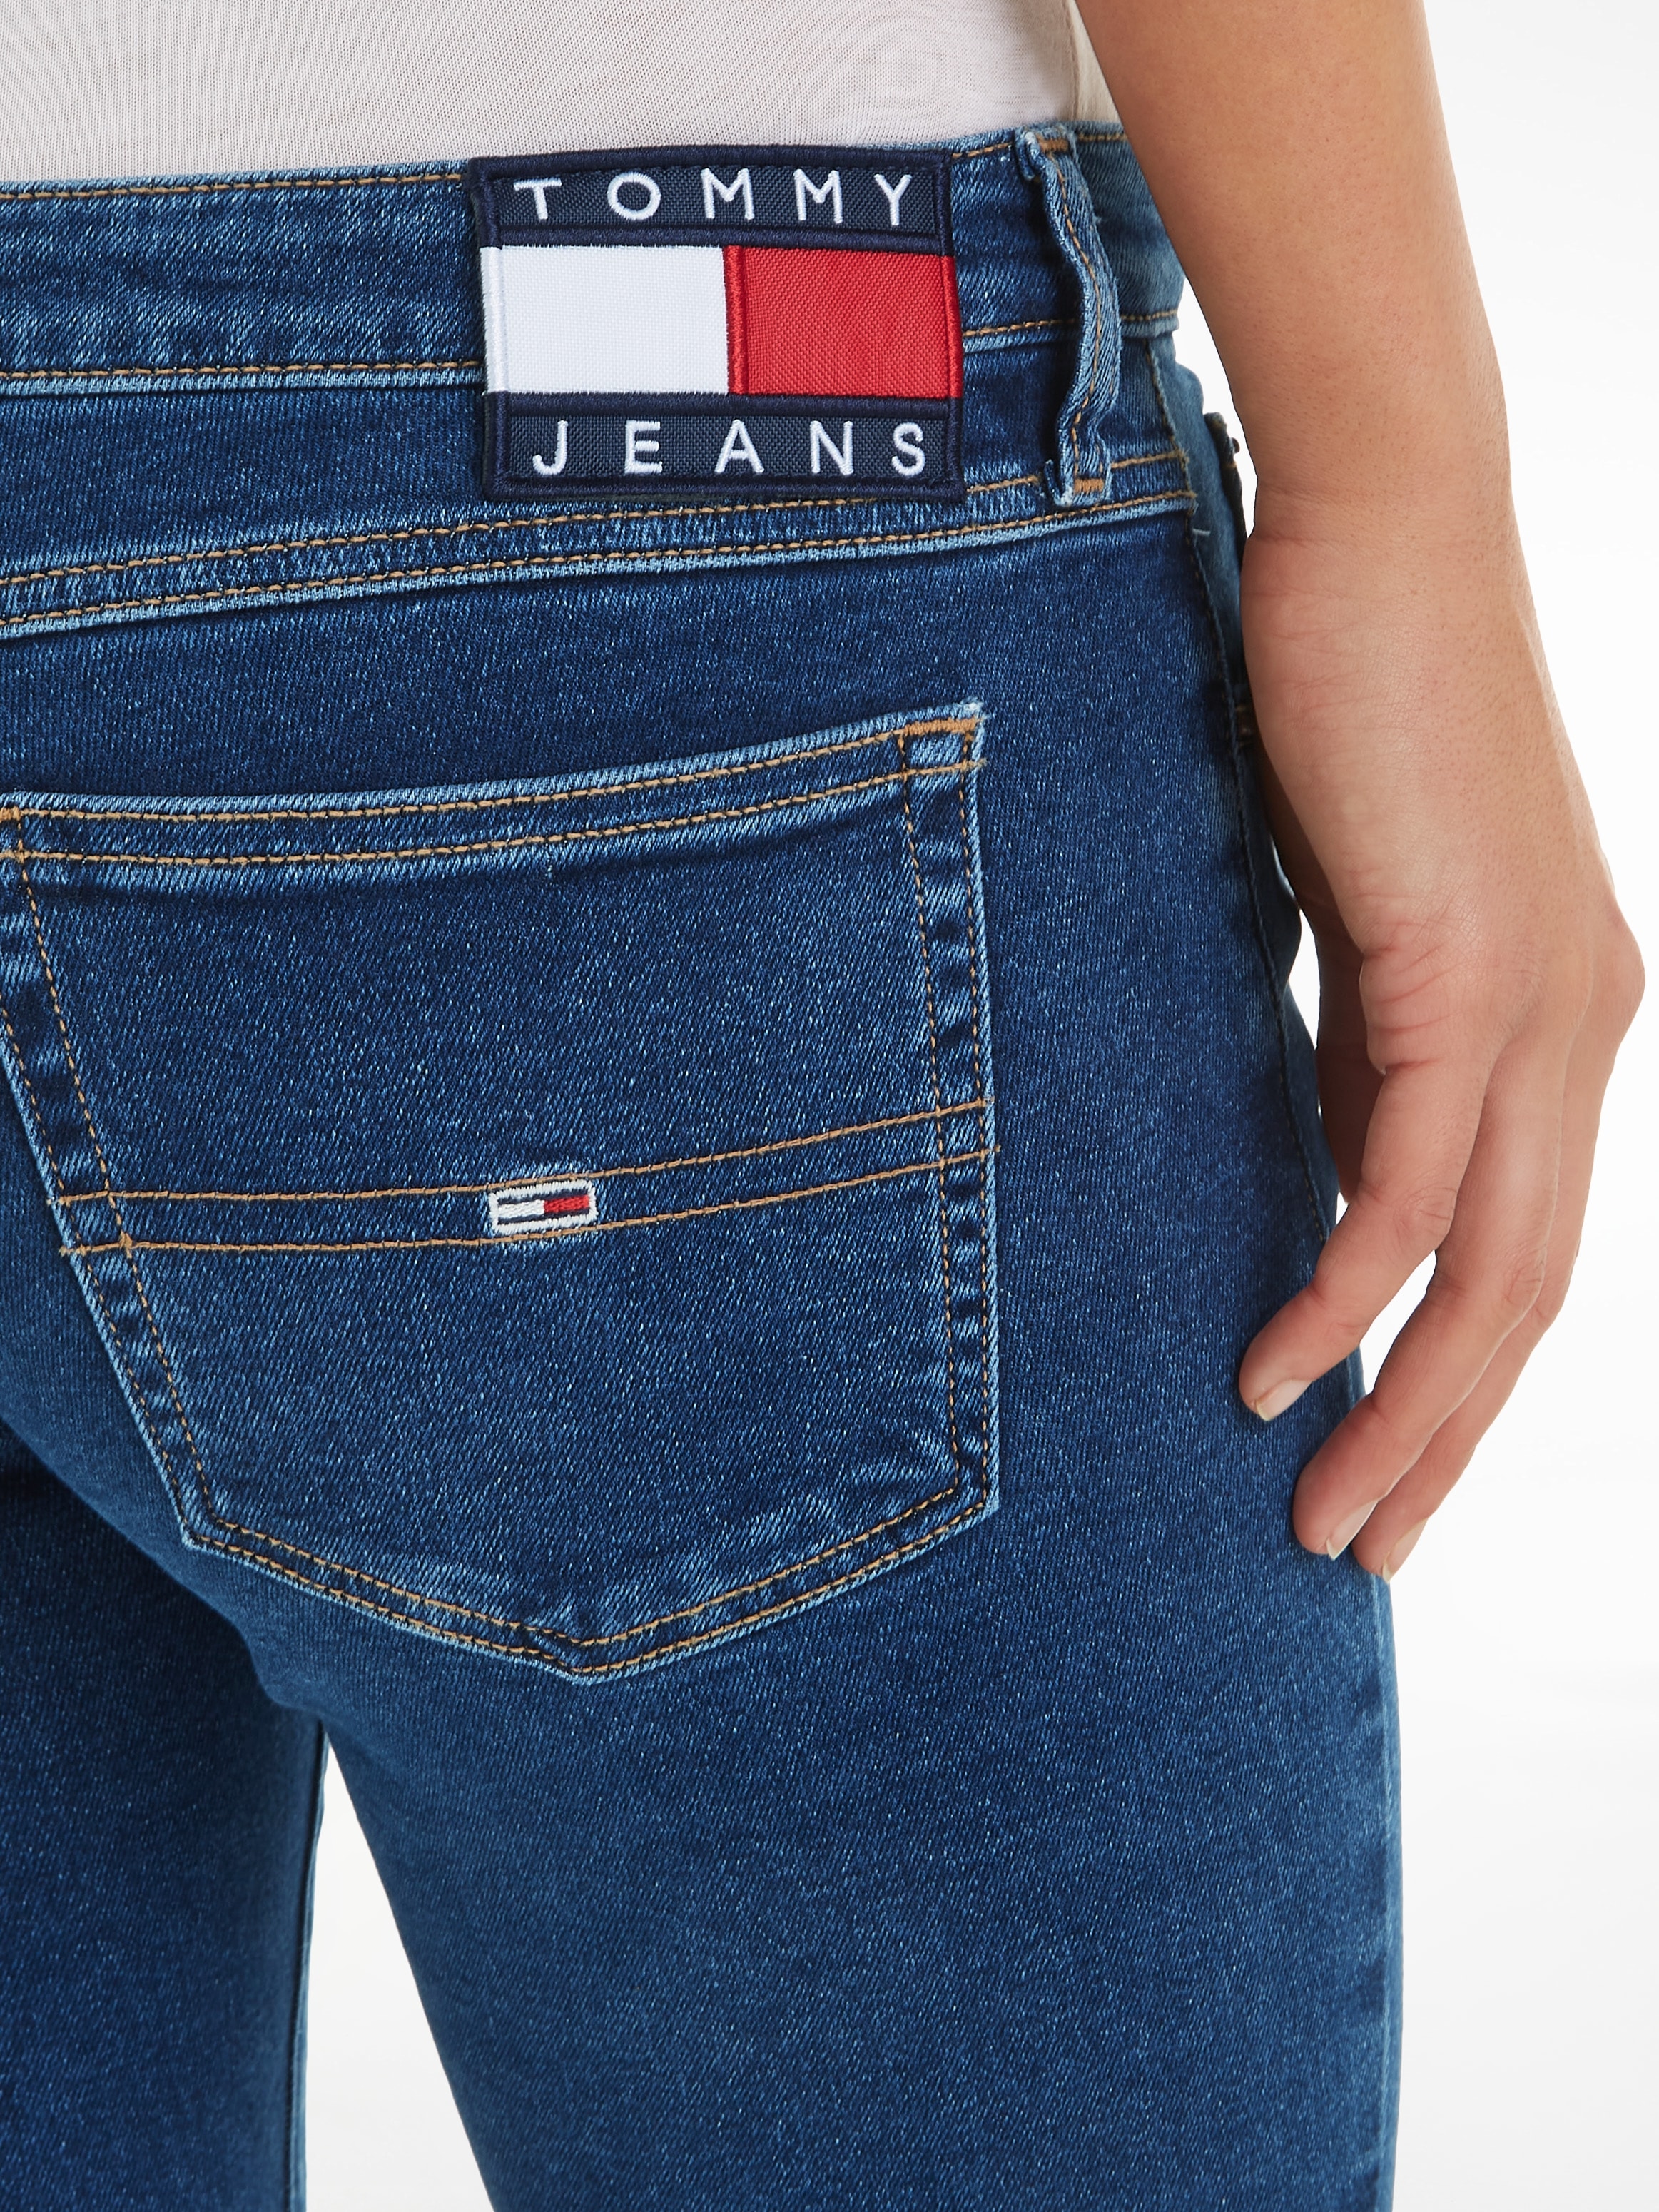 Tommy Jeans Skinny-fit-Jeans, dezenten bestellen Labelapplikationen BAUR mit 